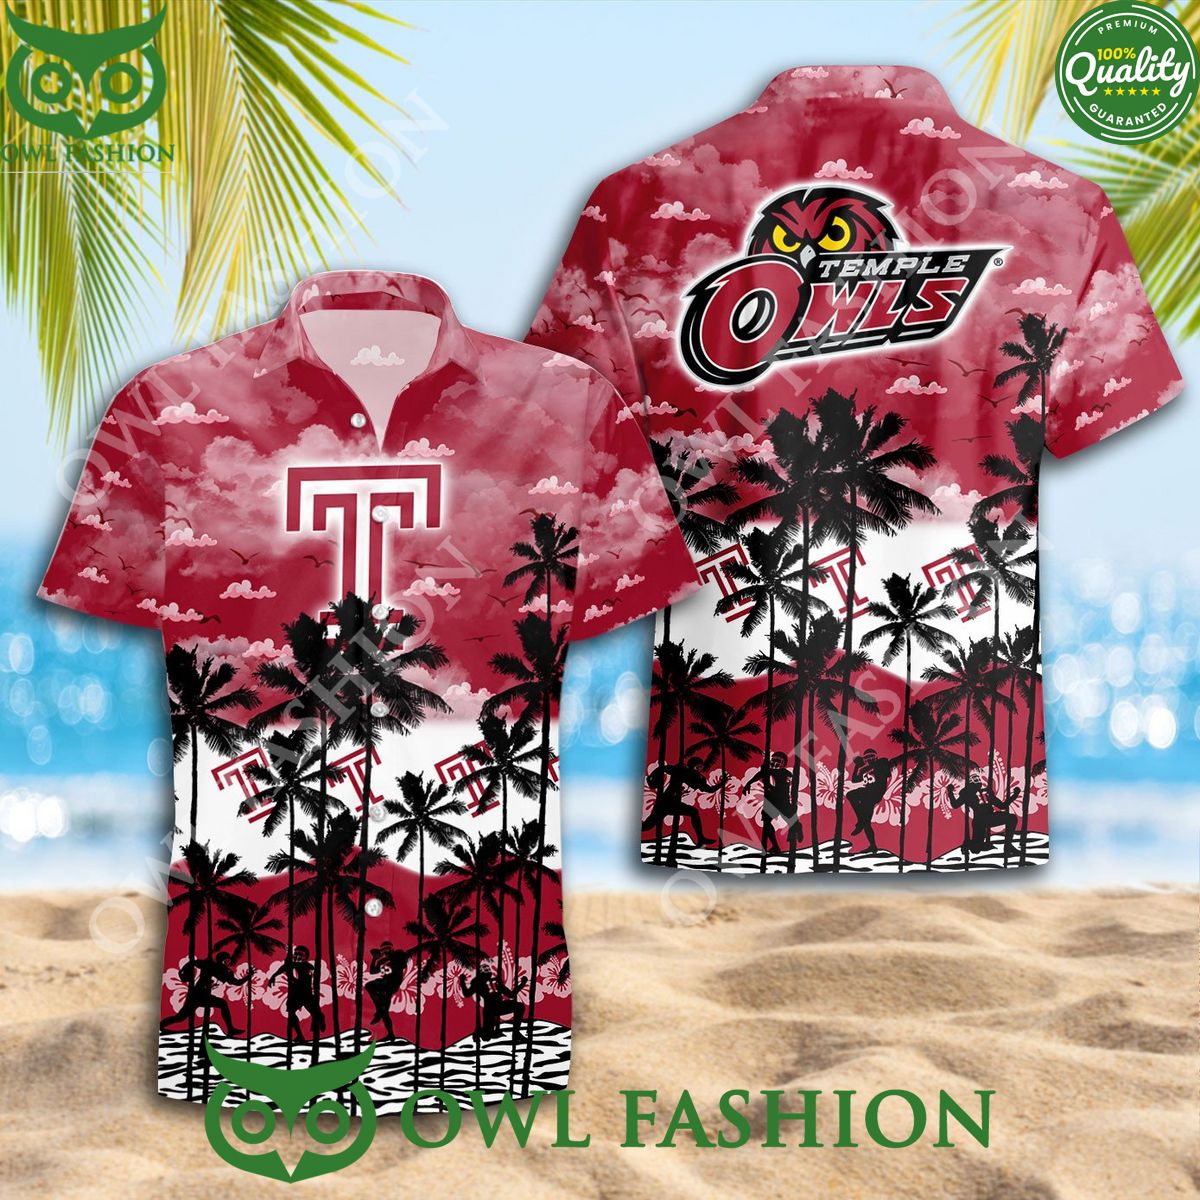 Temple Owls Hawaiian Shirt Trending Summer fan designed Trending picture dear